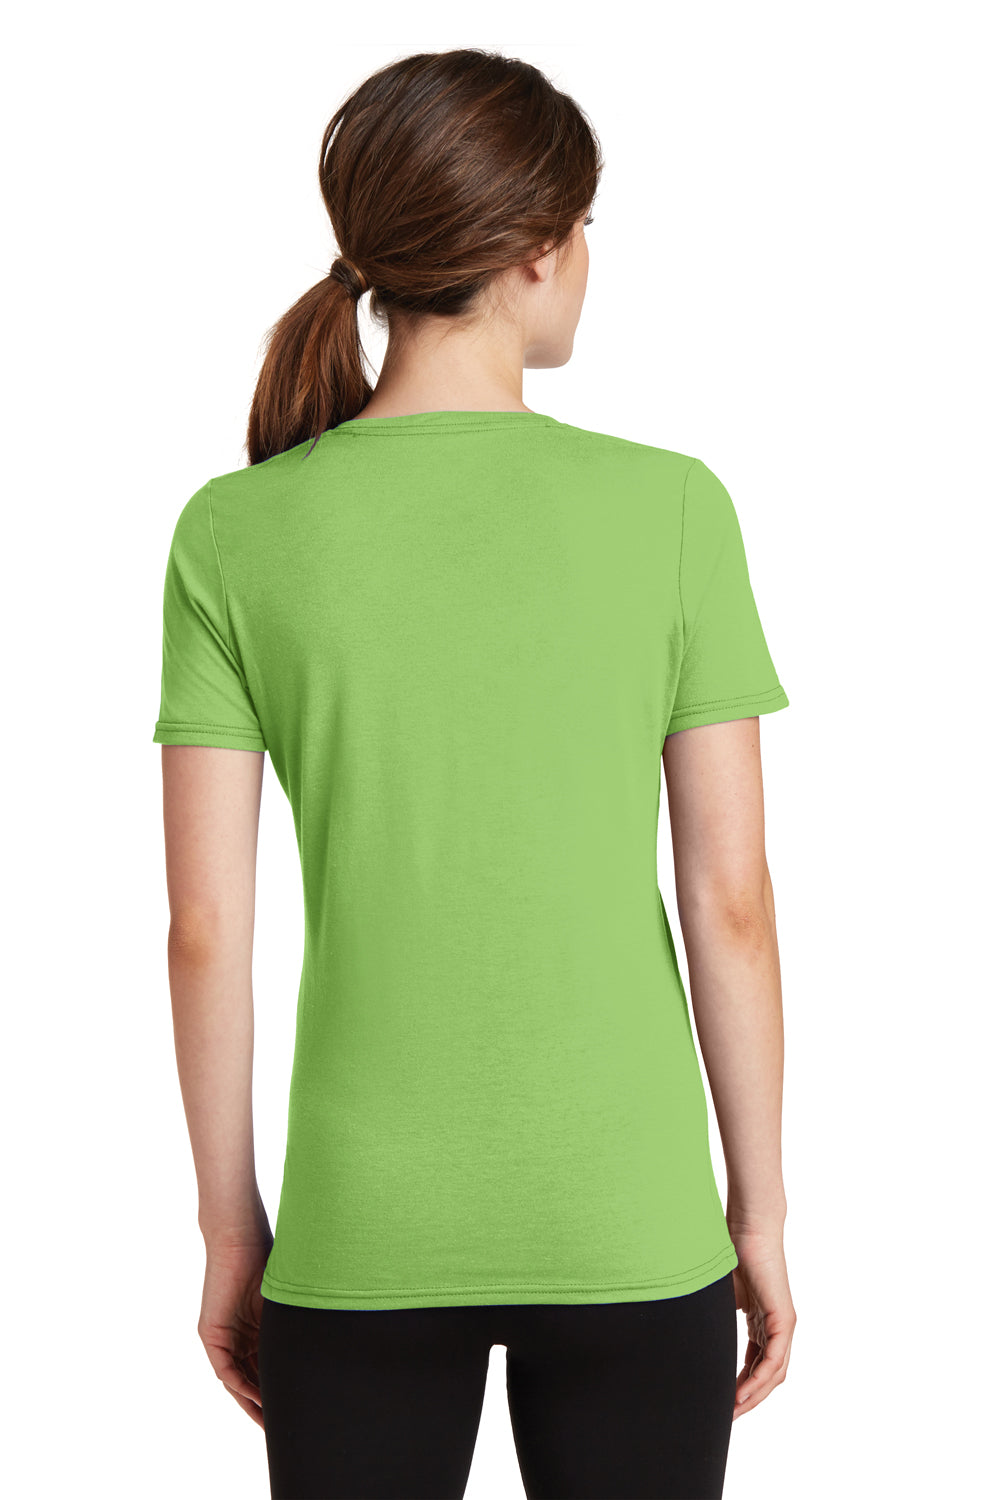 Port & Company LPC381V Womens Dry Zone Performance Moisture Wicking Short Sleeve V-Neck T-Shirt Lime Green Back